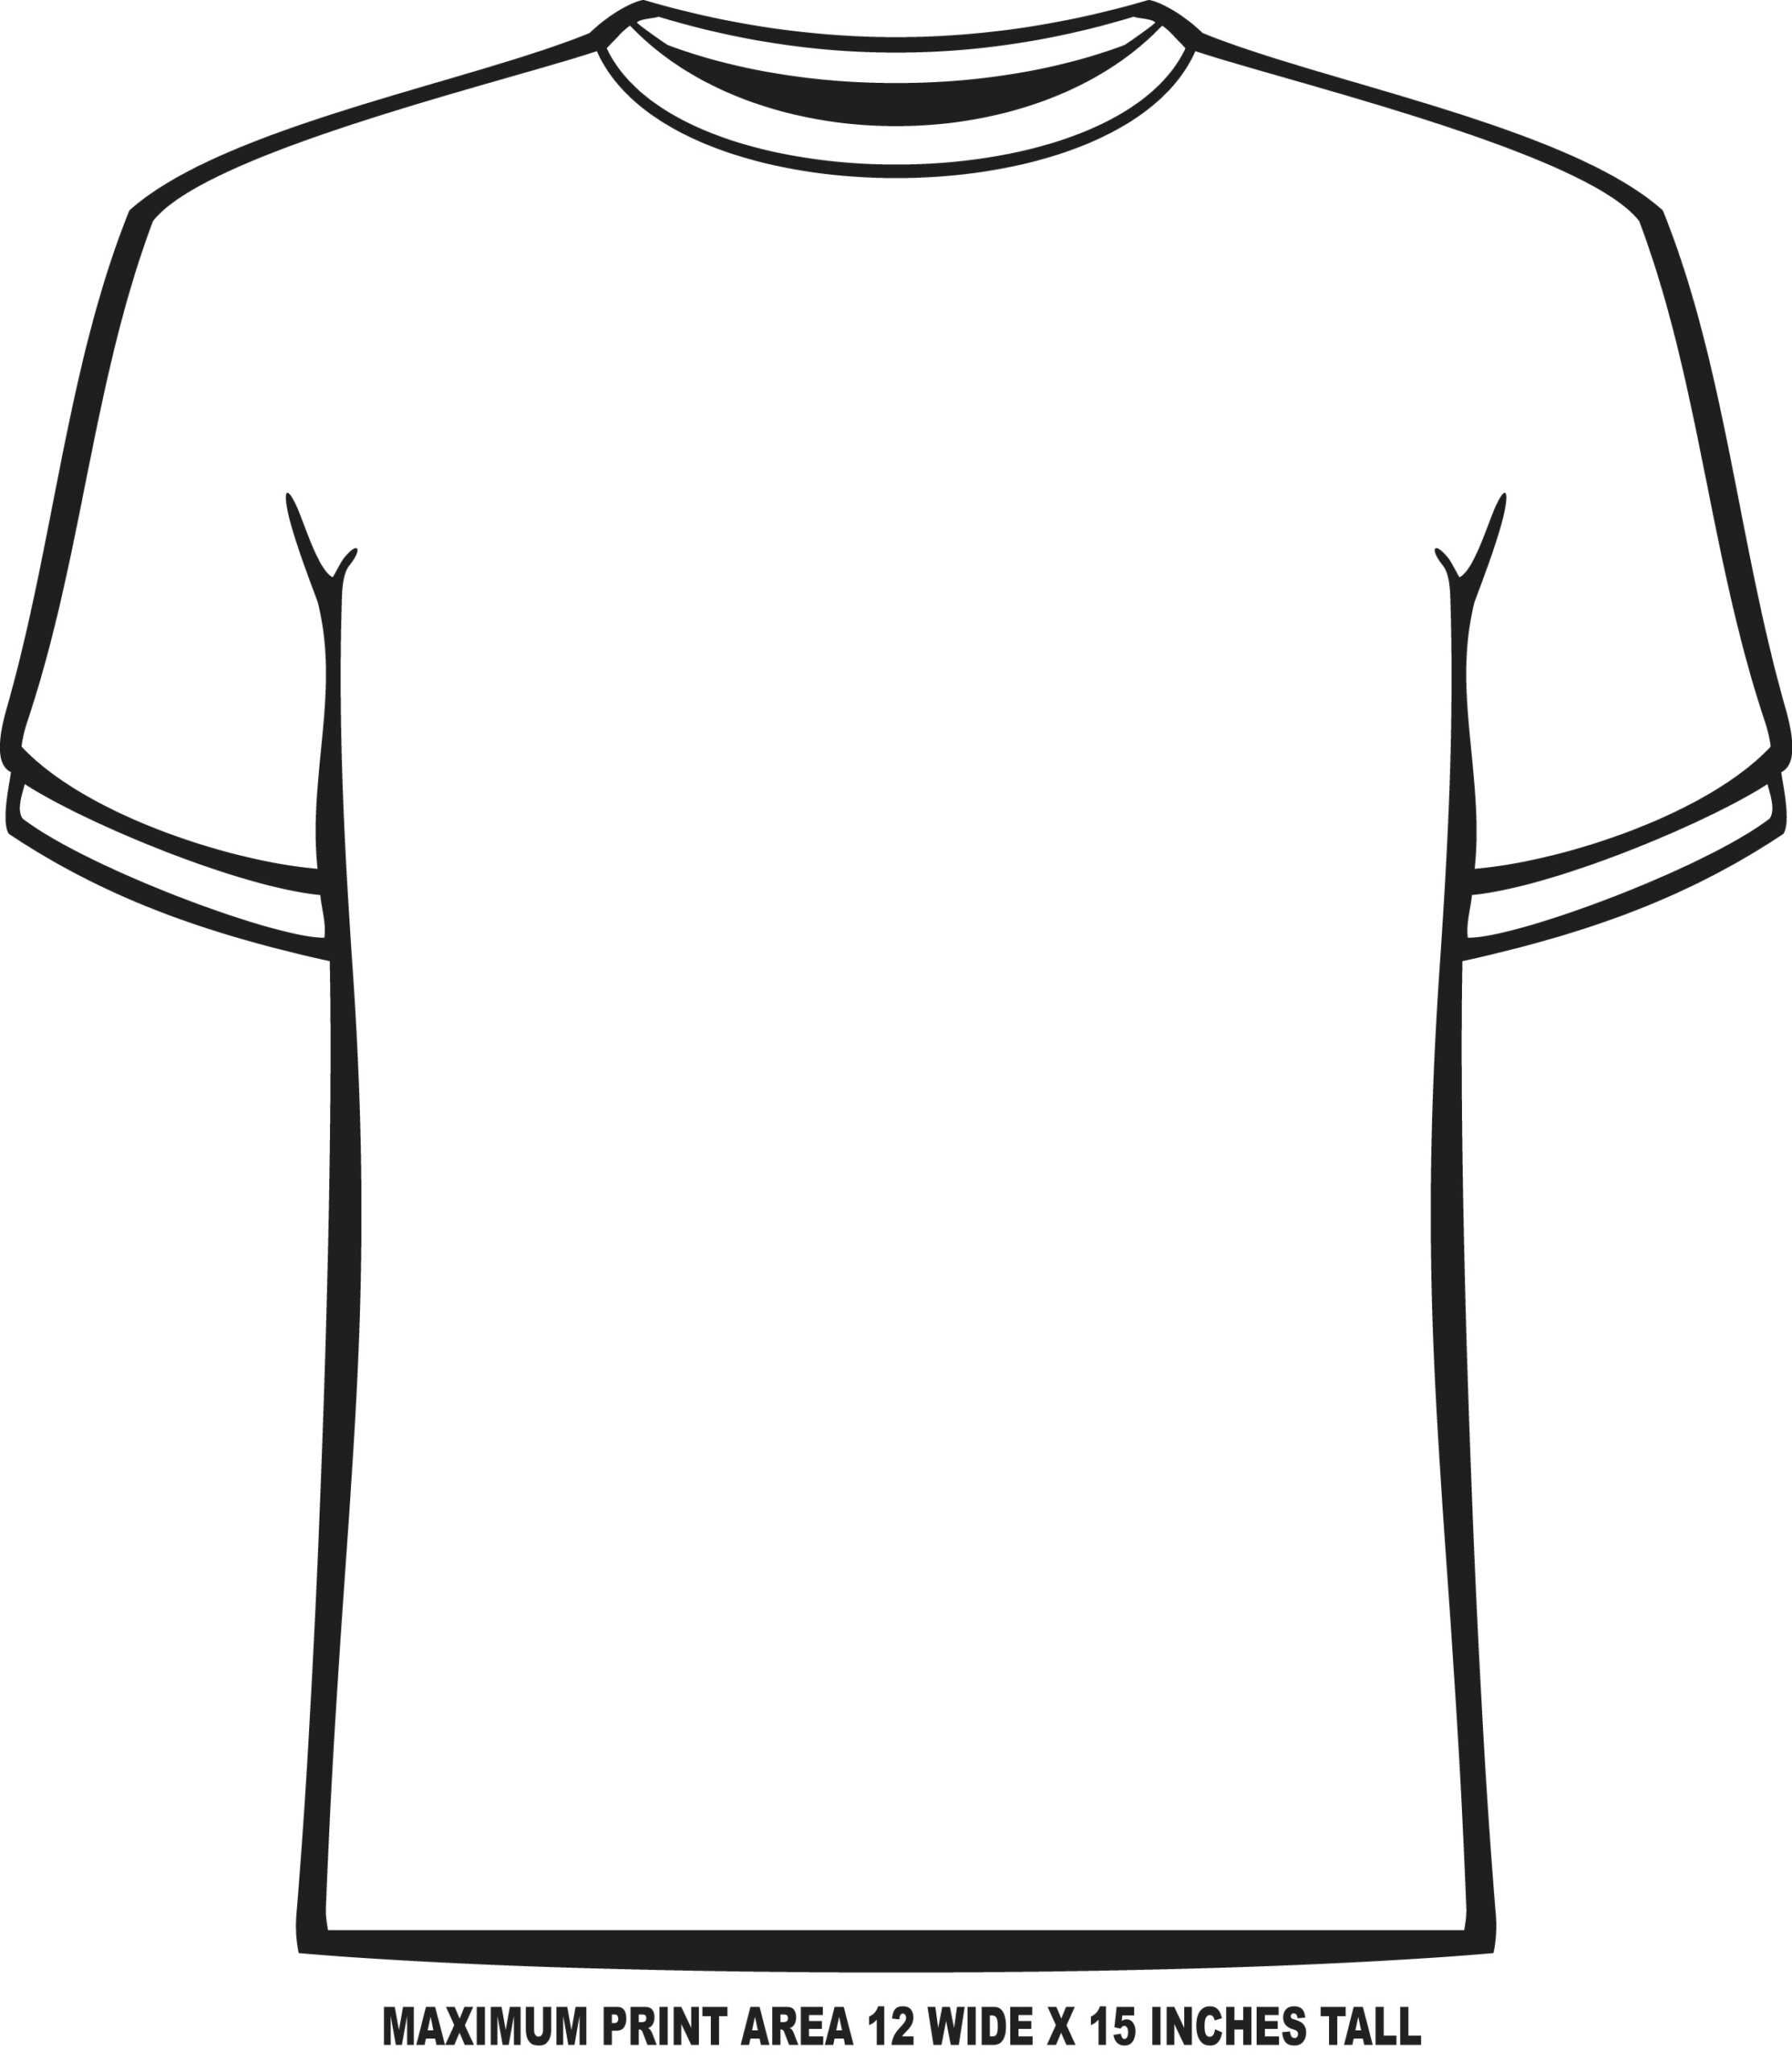 Blank Tshirt Template Pdf - Dreamworks For Blank Tshirt Template Pdf